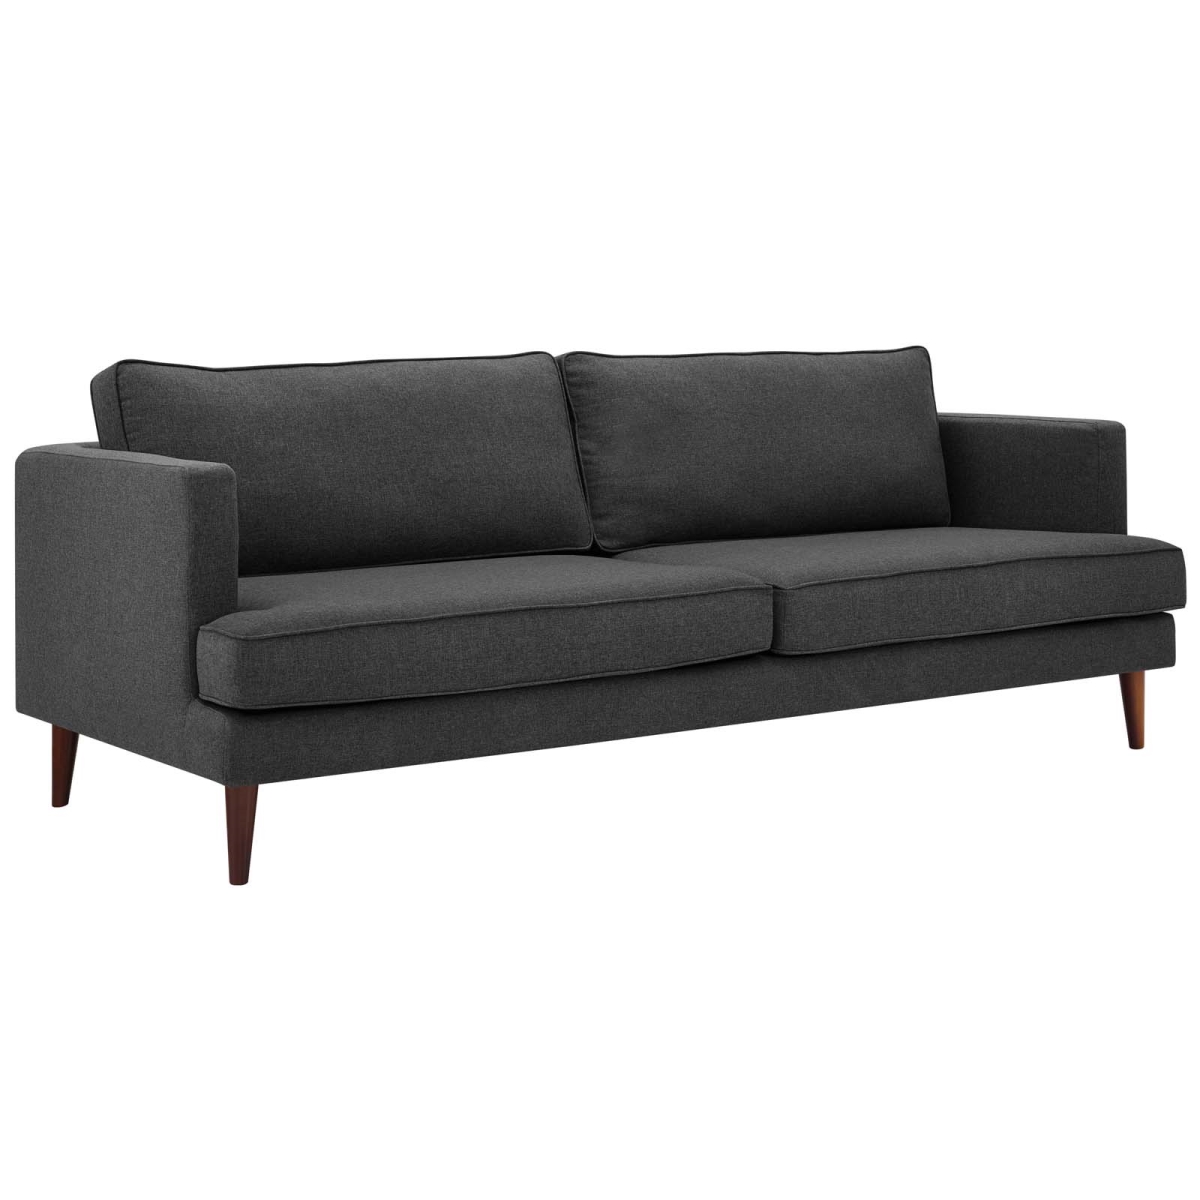 Eei-3057-gry Agile Upholstered Fabric Sofa - Gray, 34.5 X 35 X 86.5 In.